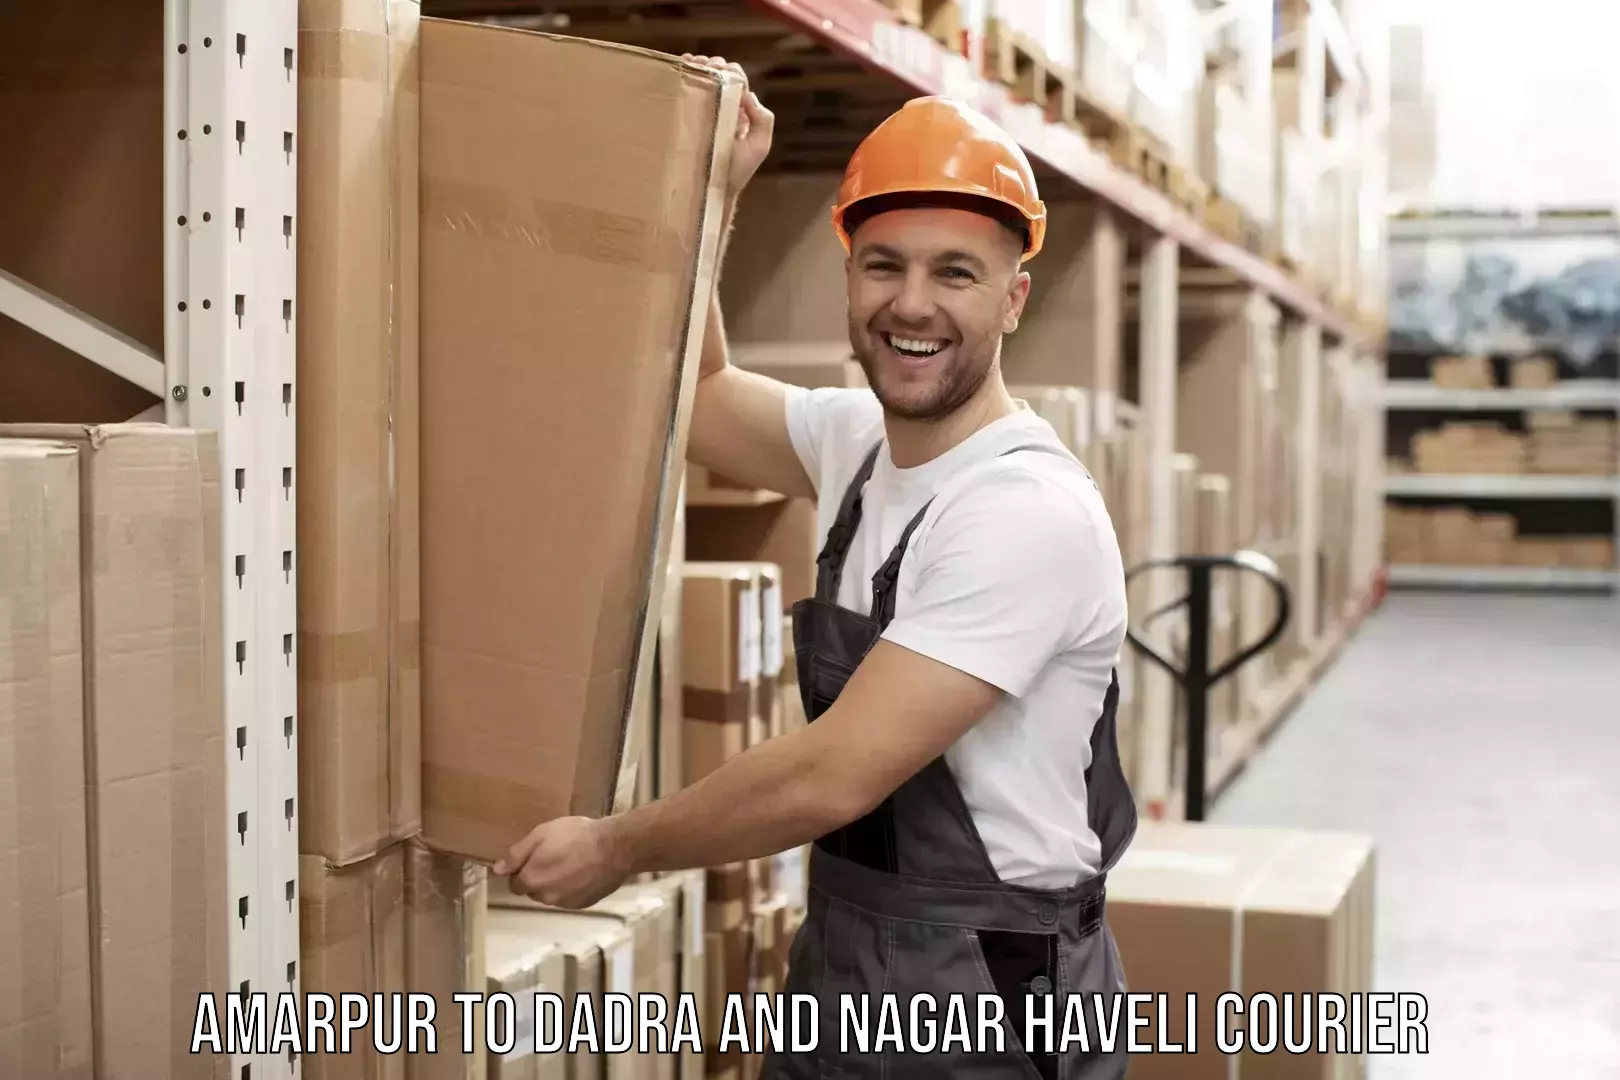 Professional moving company Amarpur to Dadra and Nagar Haveli